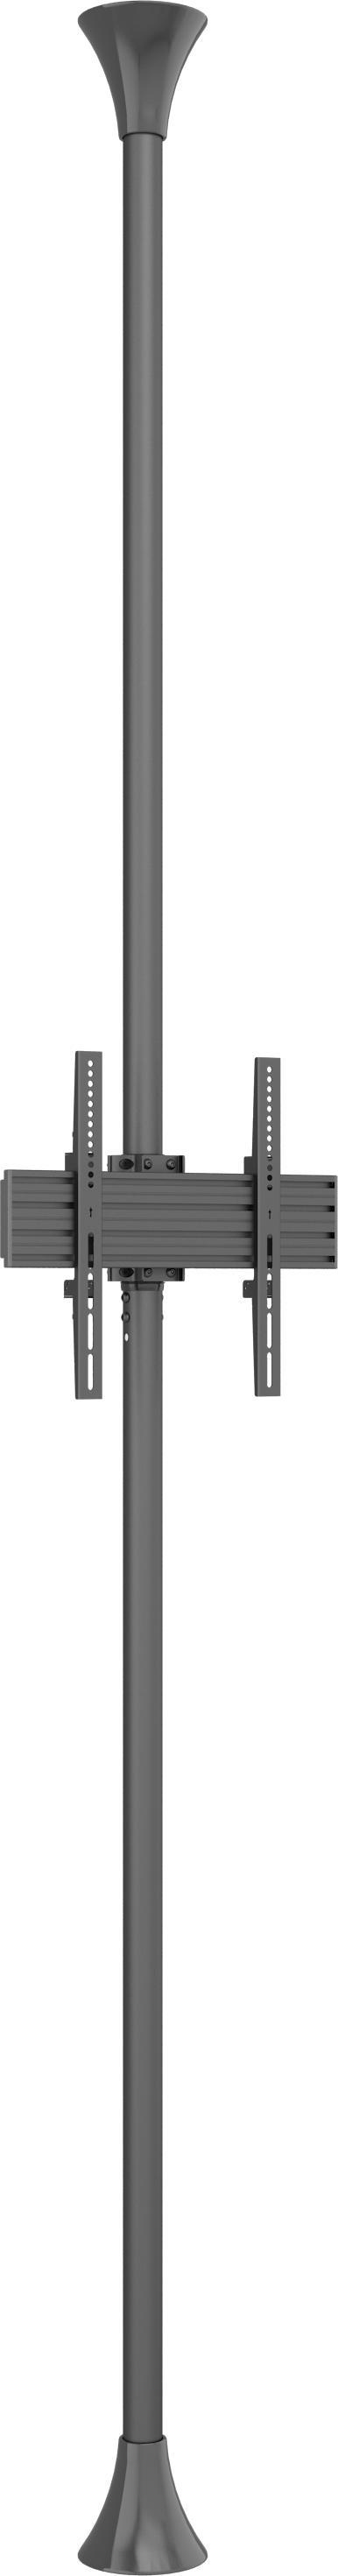 Single-Screen Single-Pole Floor-to-Ceiling Mount